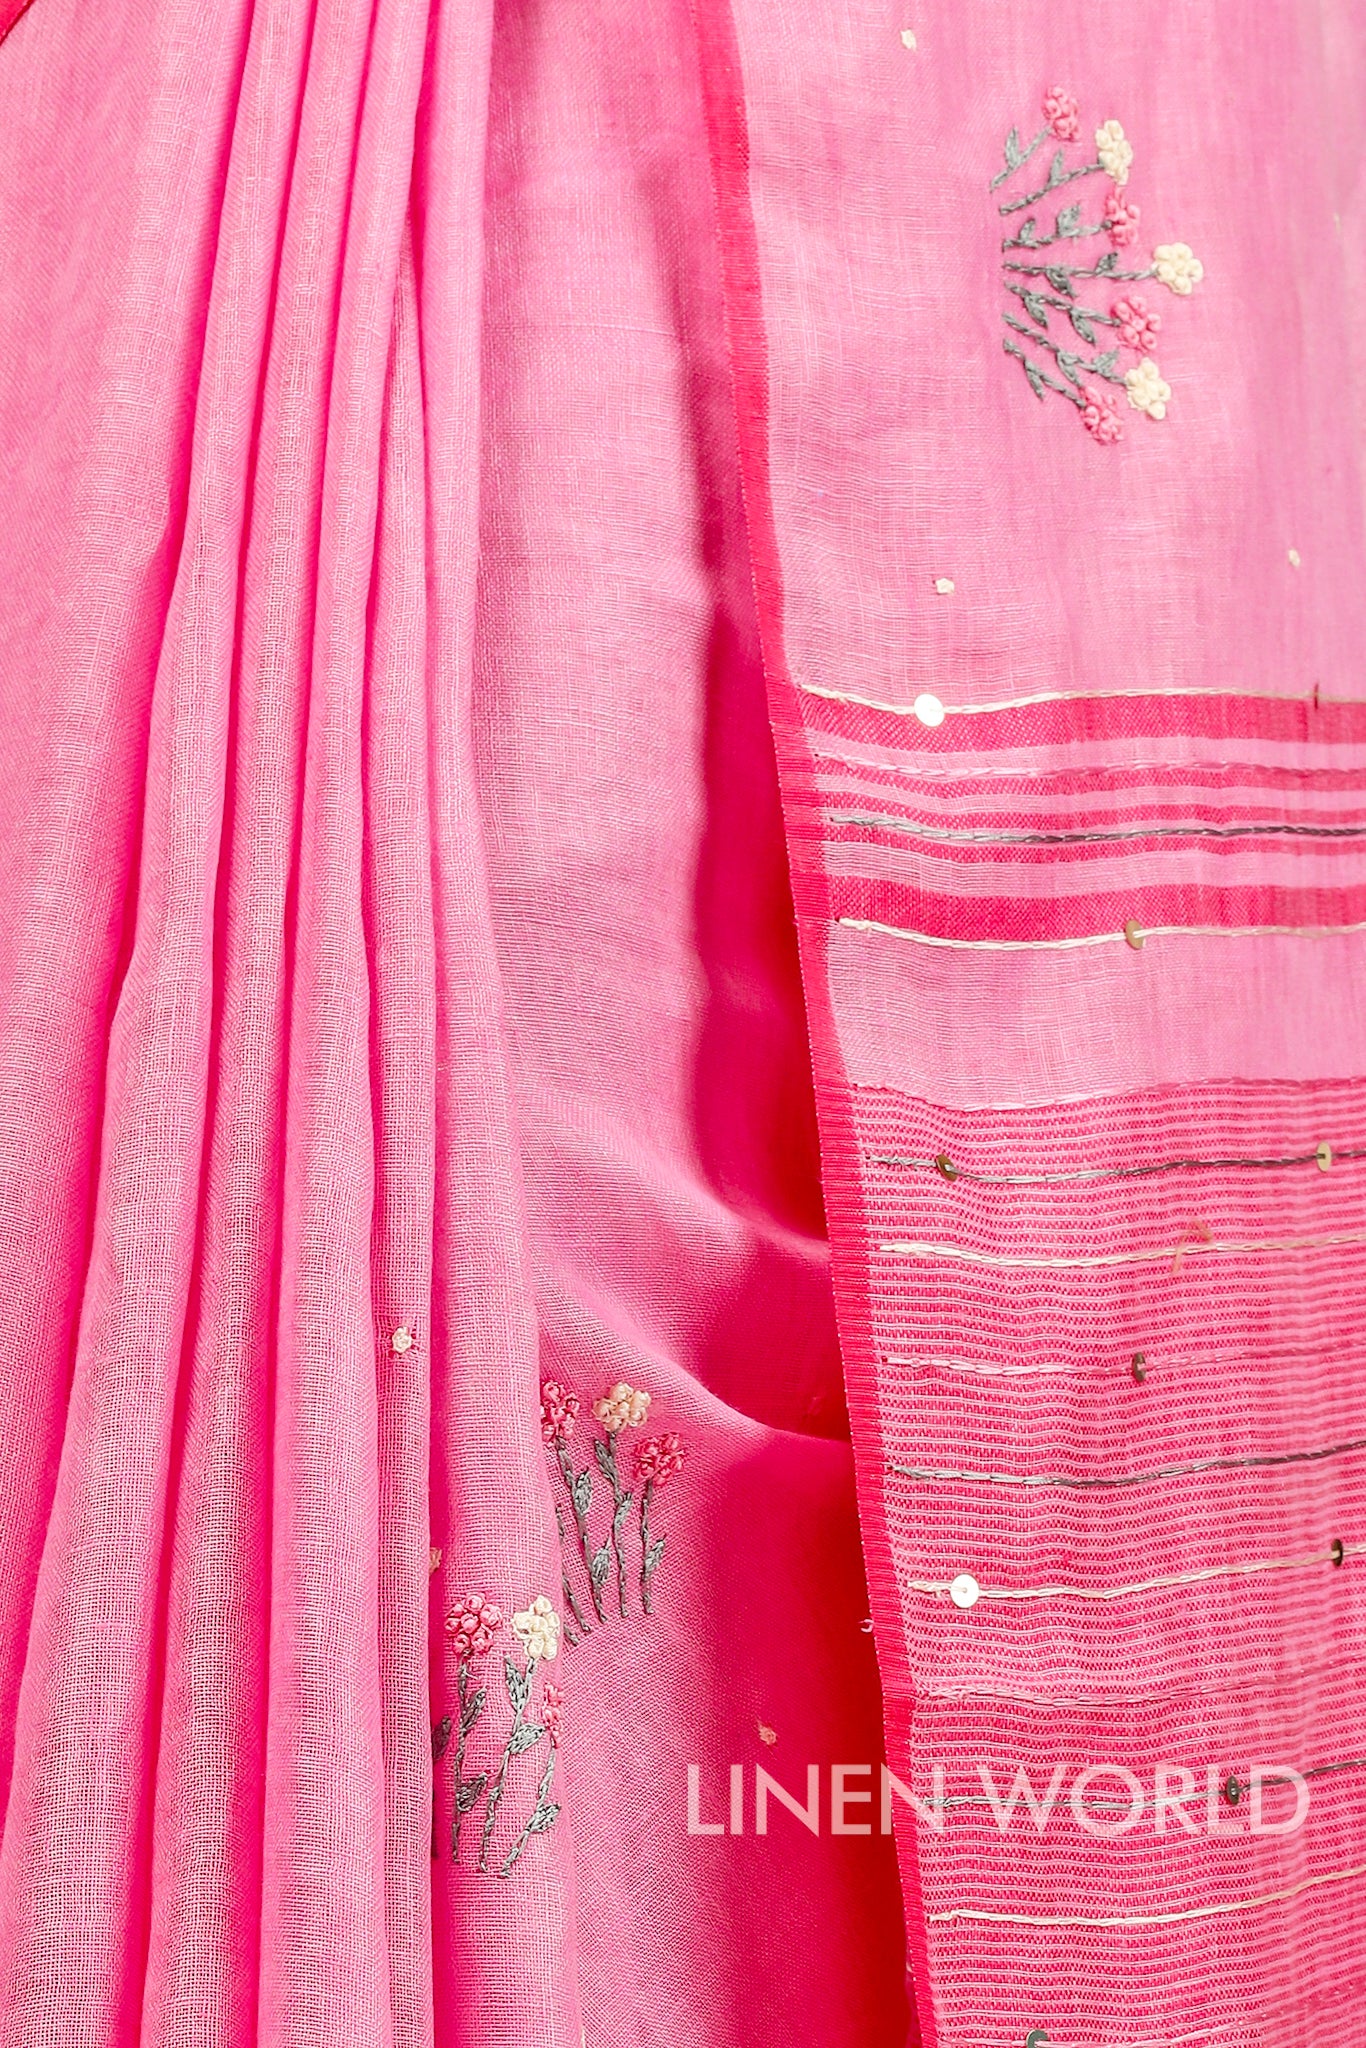 naisha - french knot hand embroidered pure linen sari - linenworldonline.in